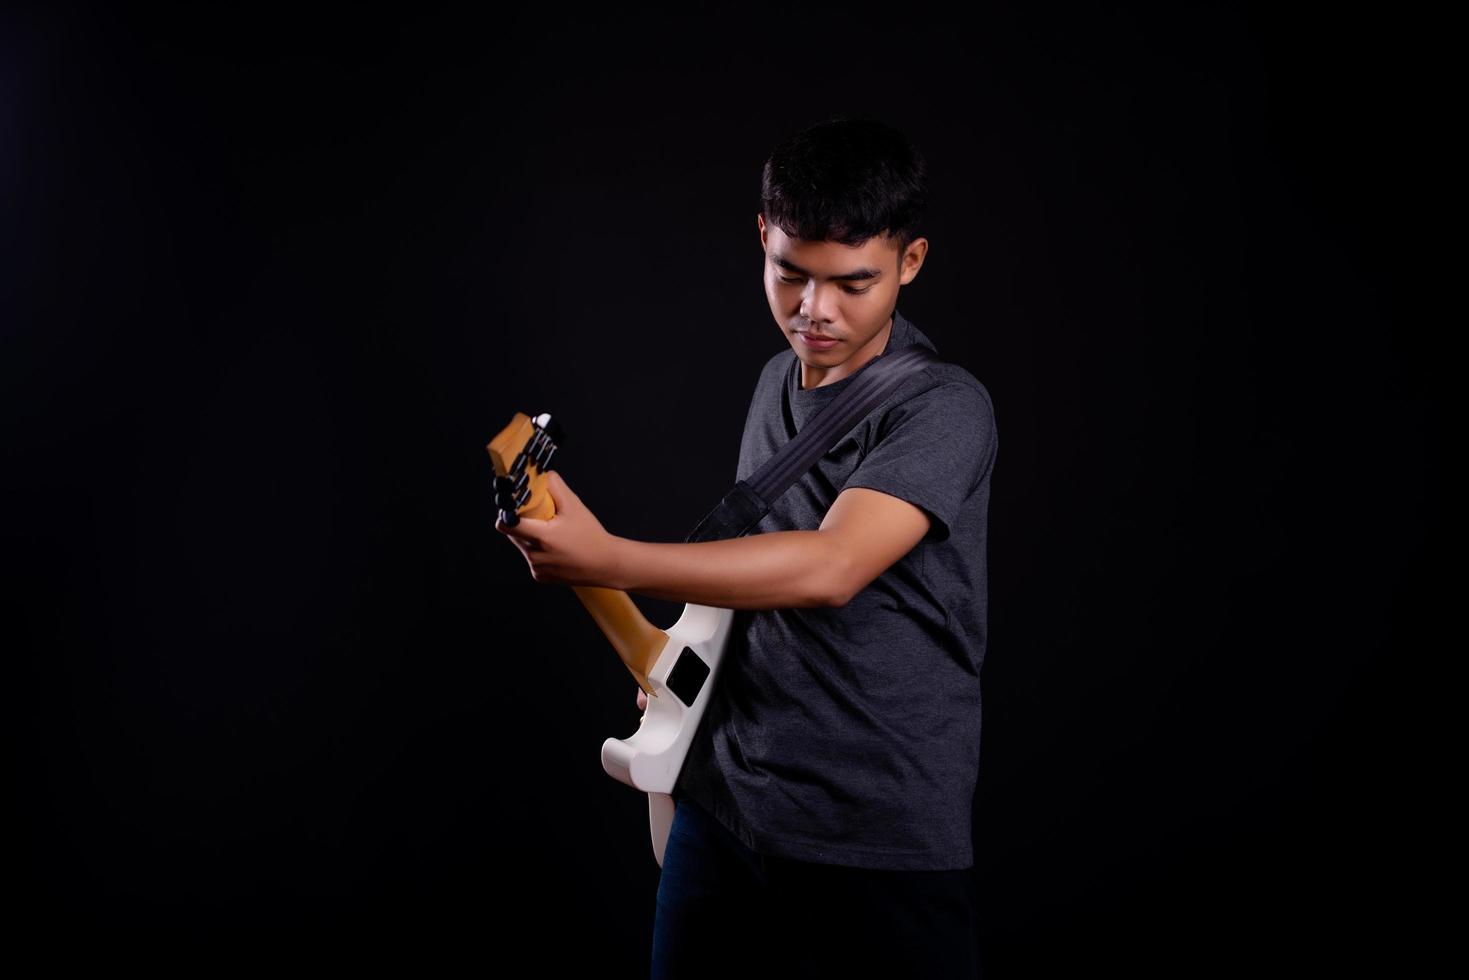 ung man i svart skinnjacka med elgitarr mot svart bakgrund i studion foto